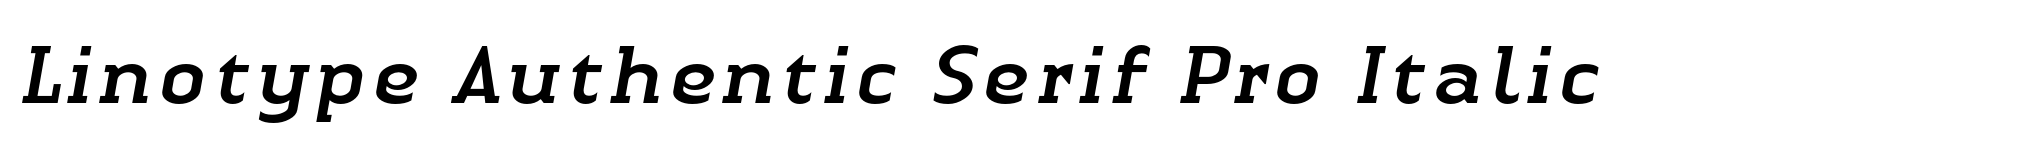 Linotype Authentic Serif Pro Italic image